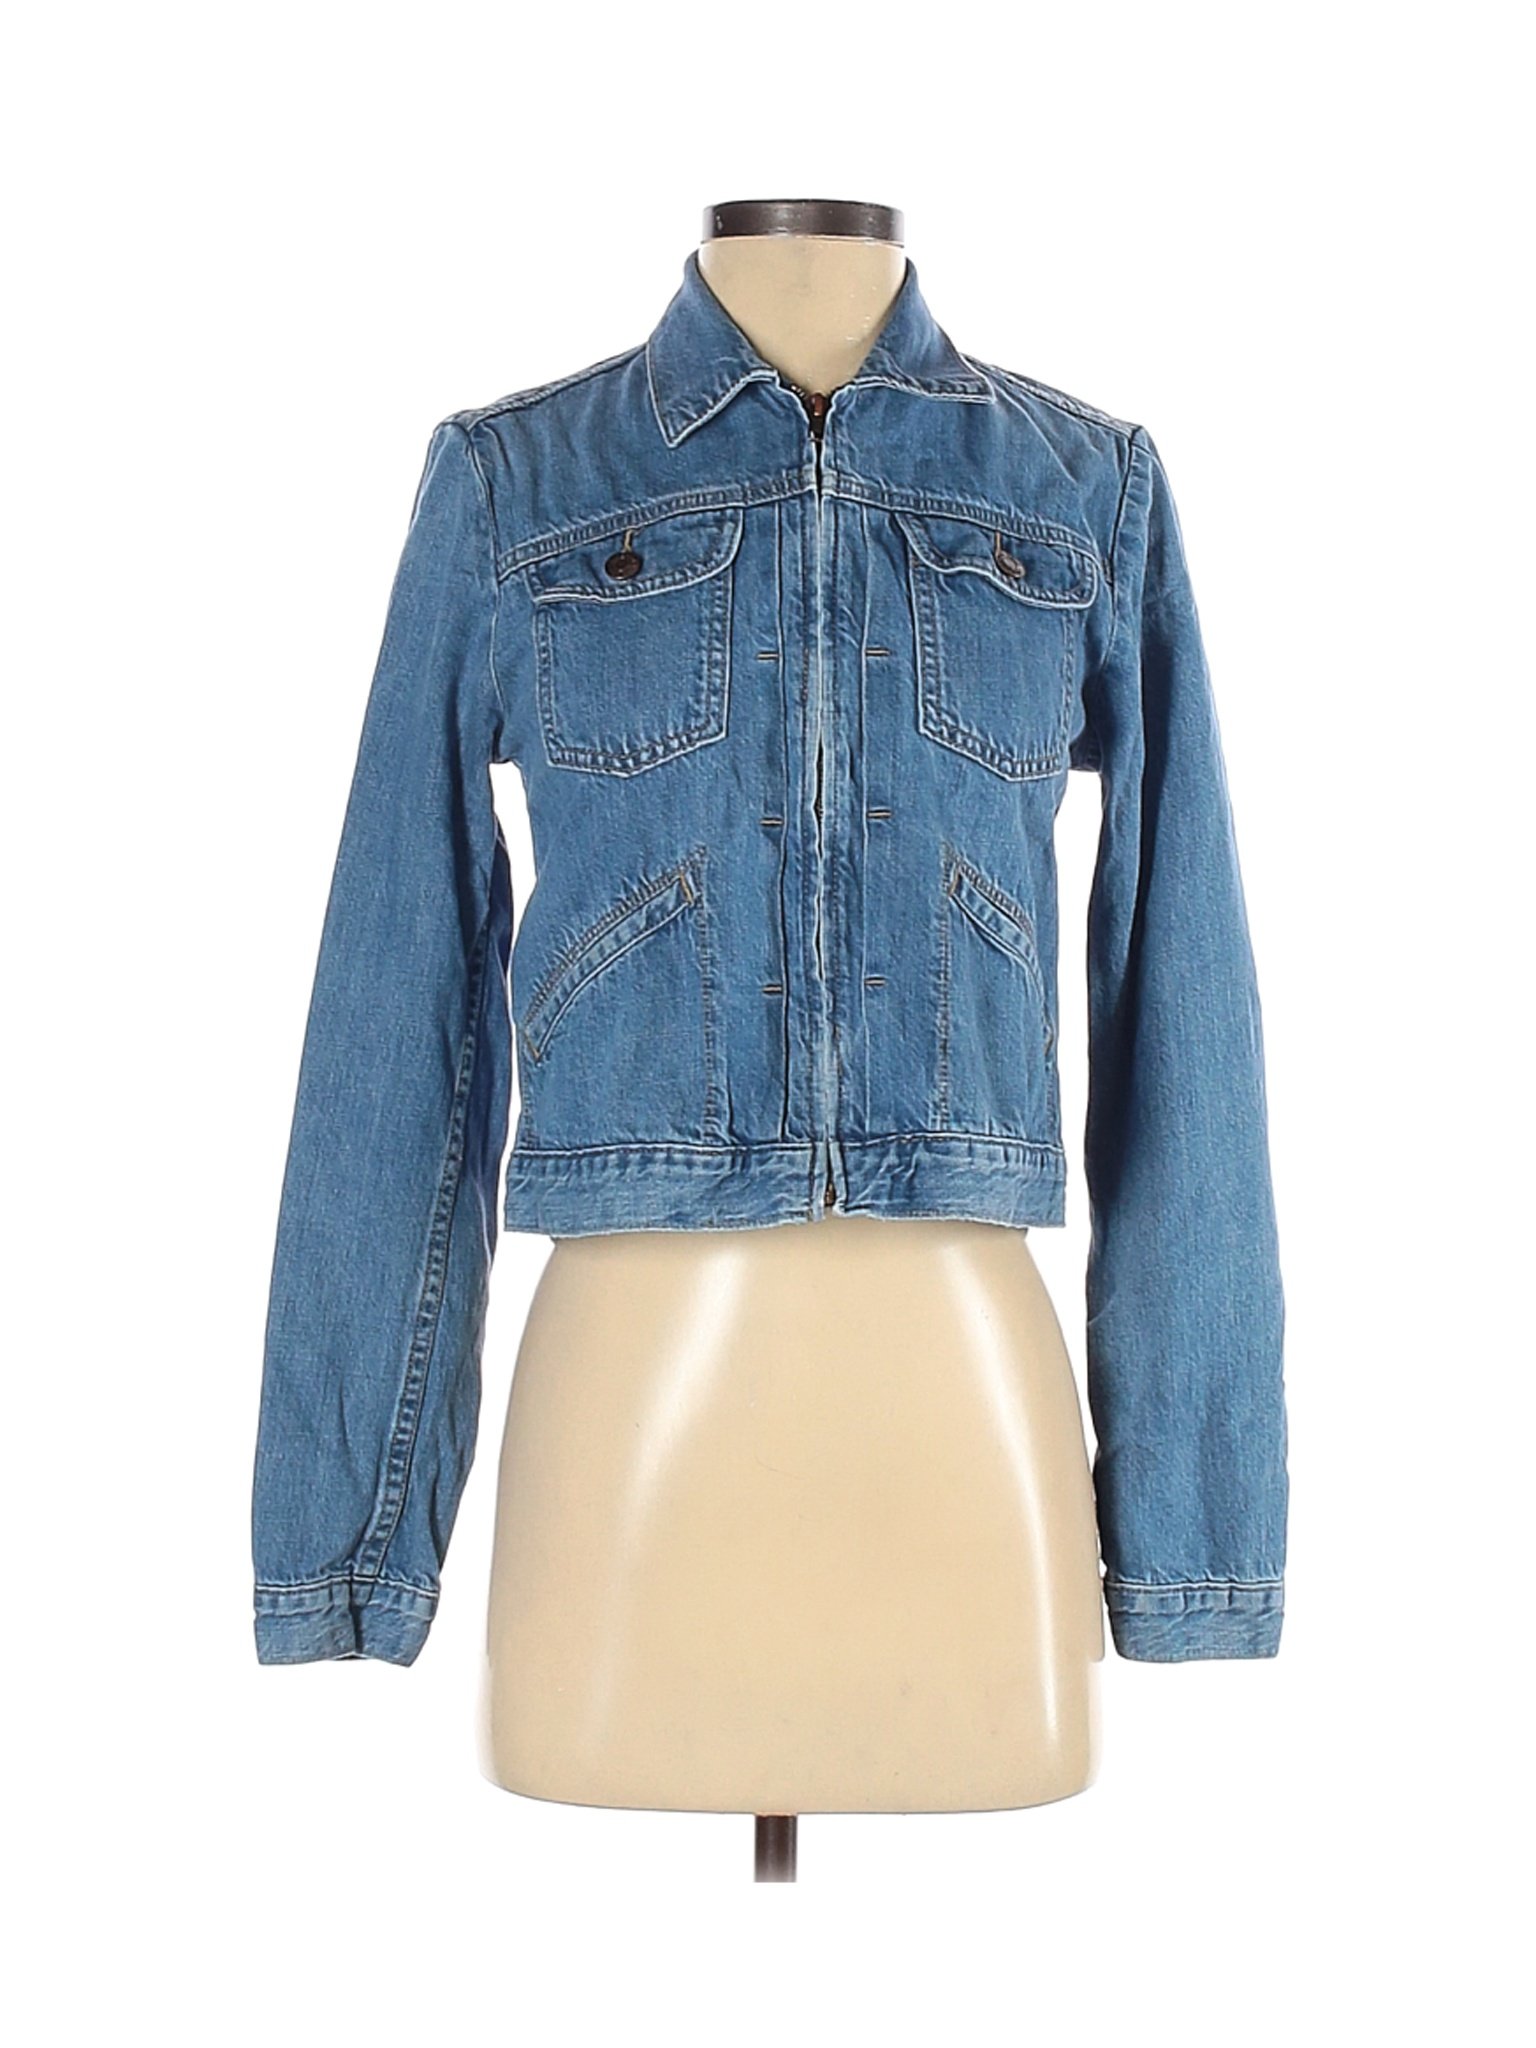 Gap Women Blue Denim Jacket S | eBay